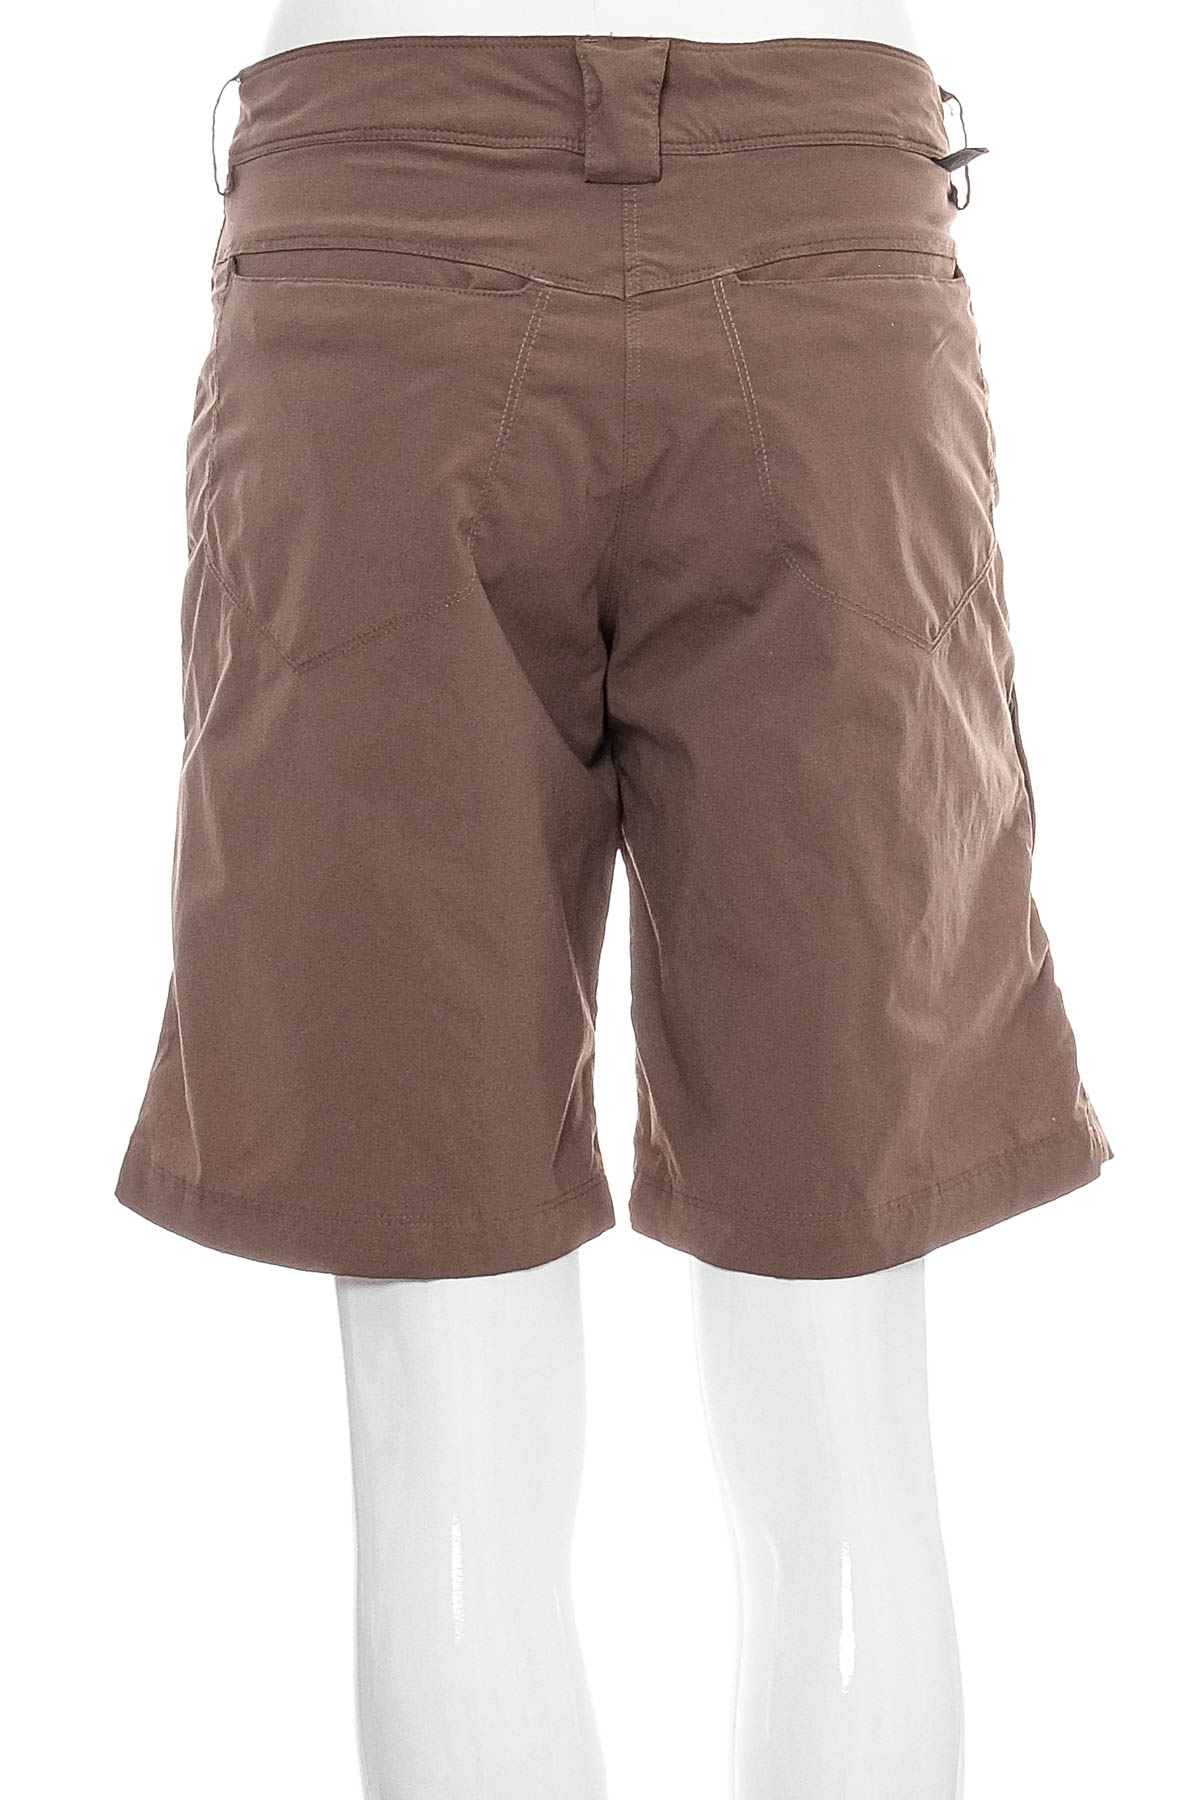 Female shorts - Salomon - 1